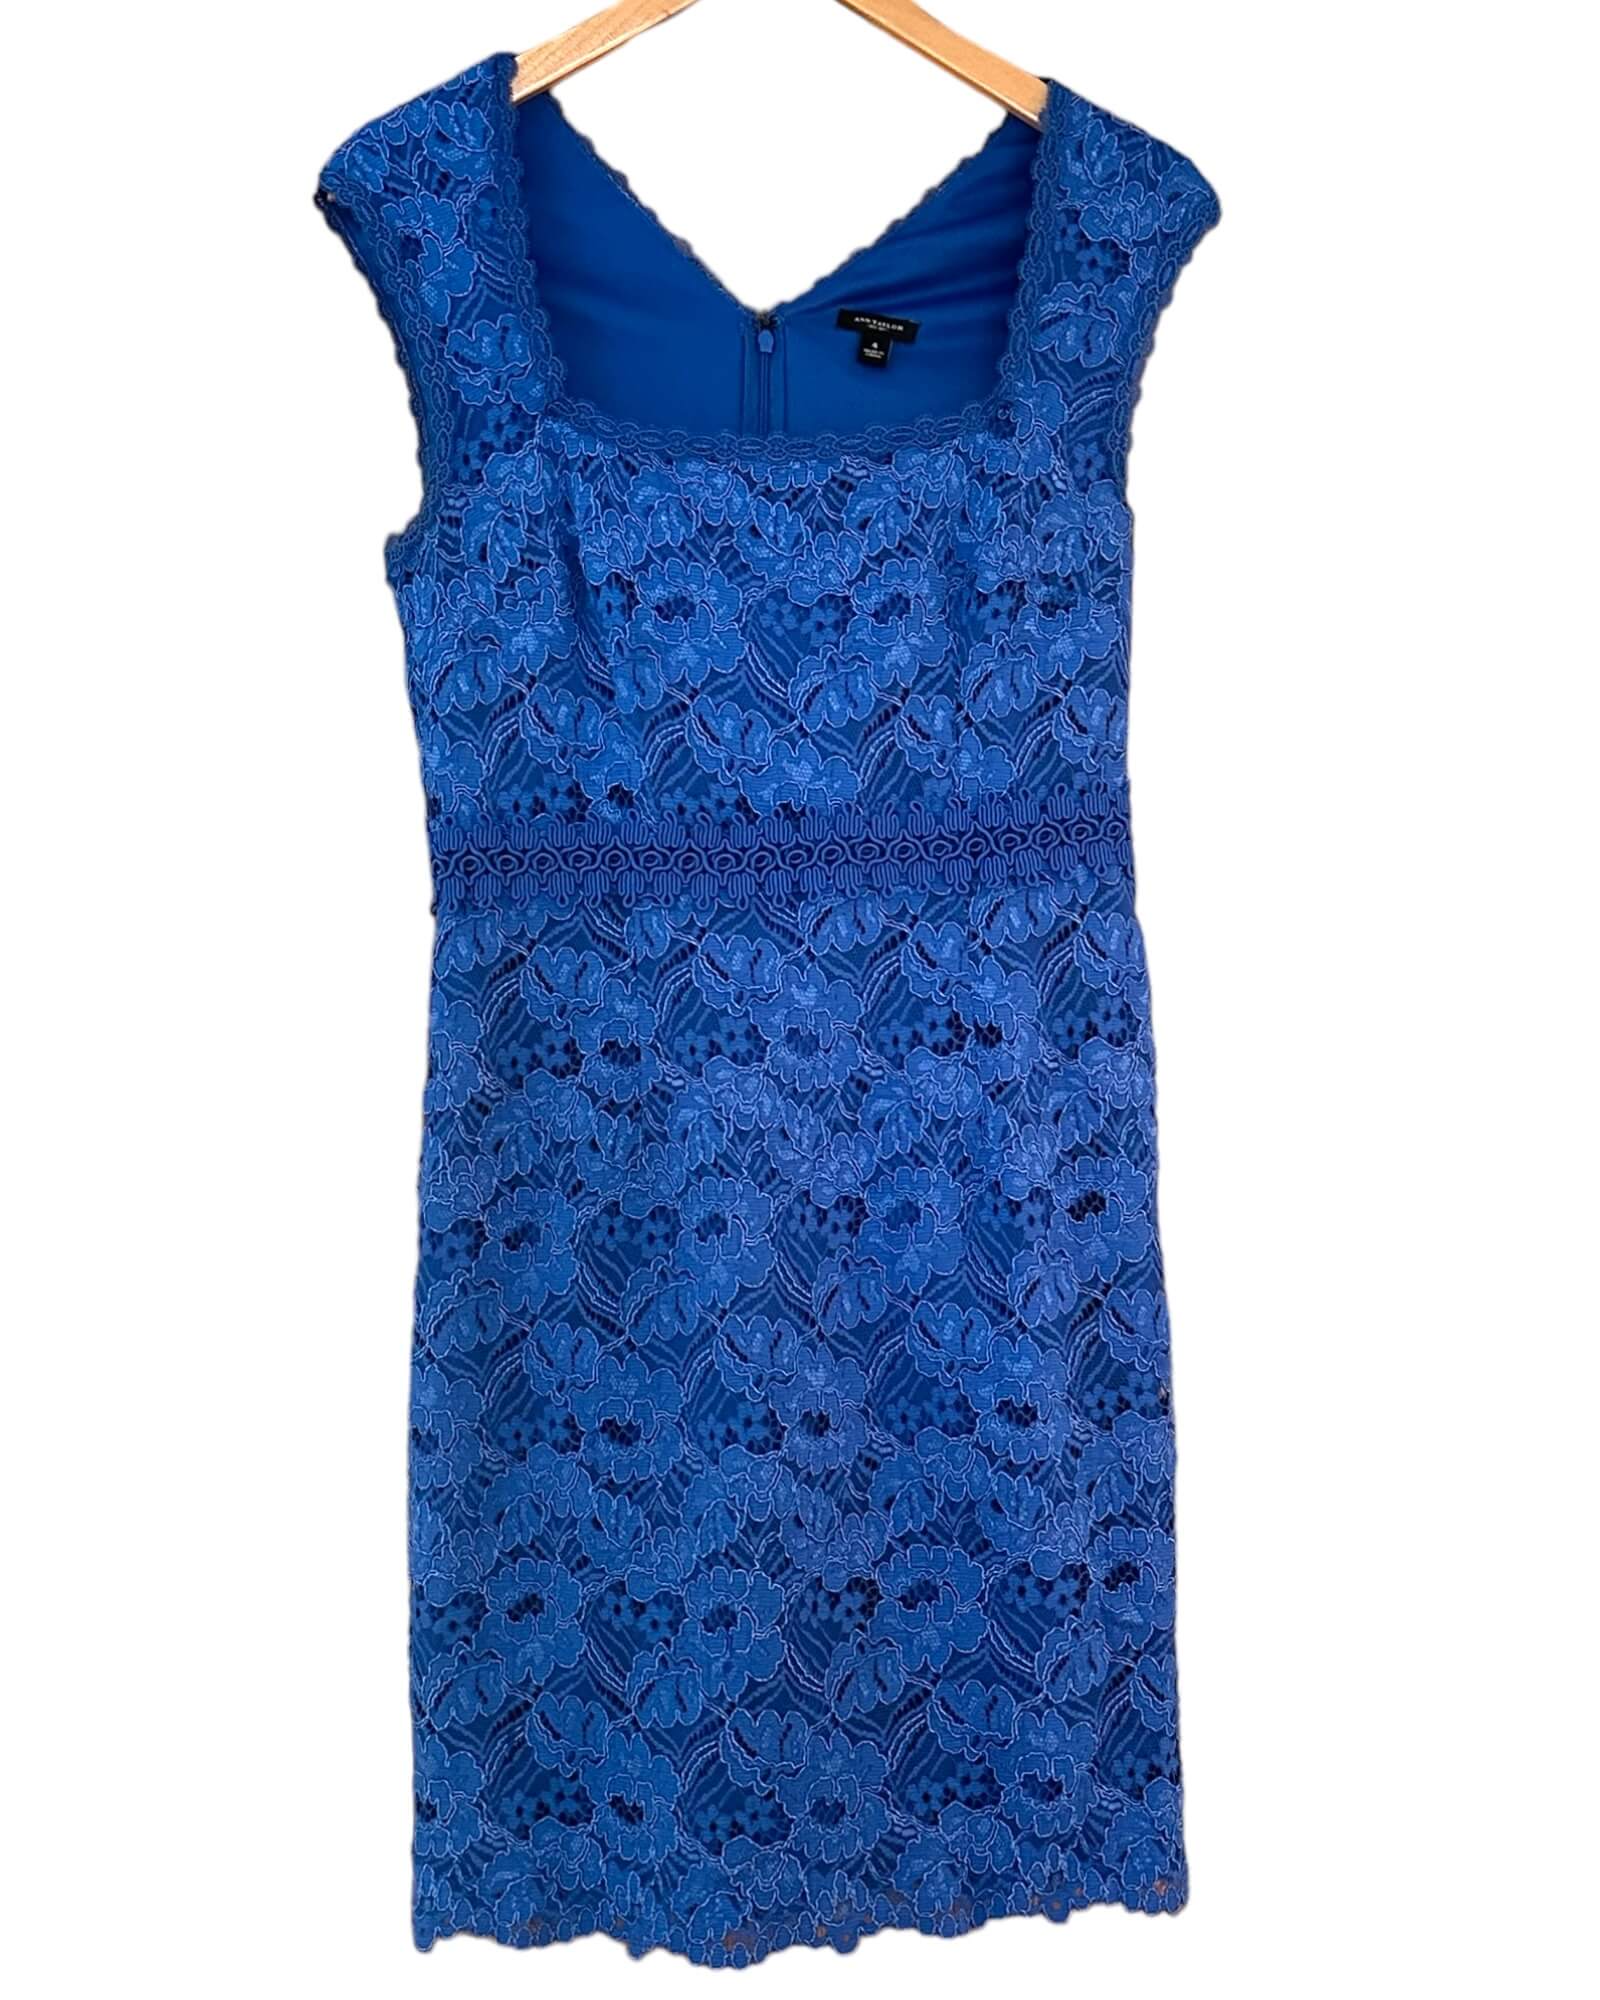 Light Summer ANN TAYLOR periwinkle blue corded lace sleeveless sheath dress